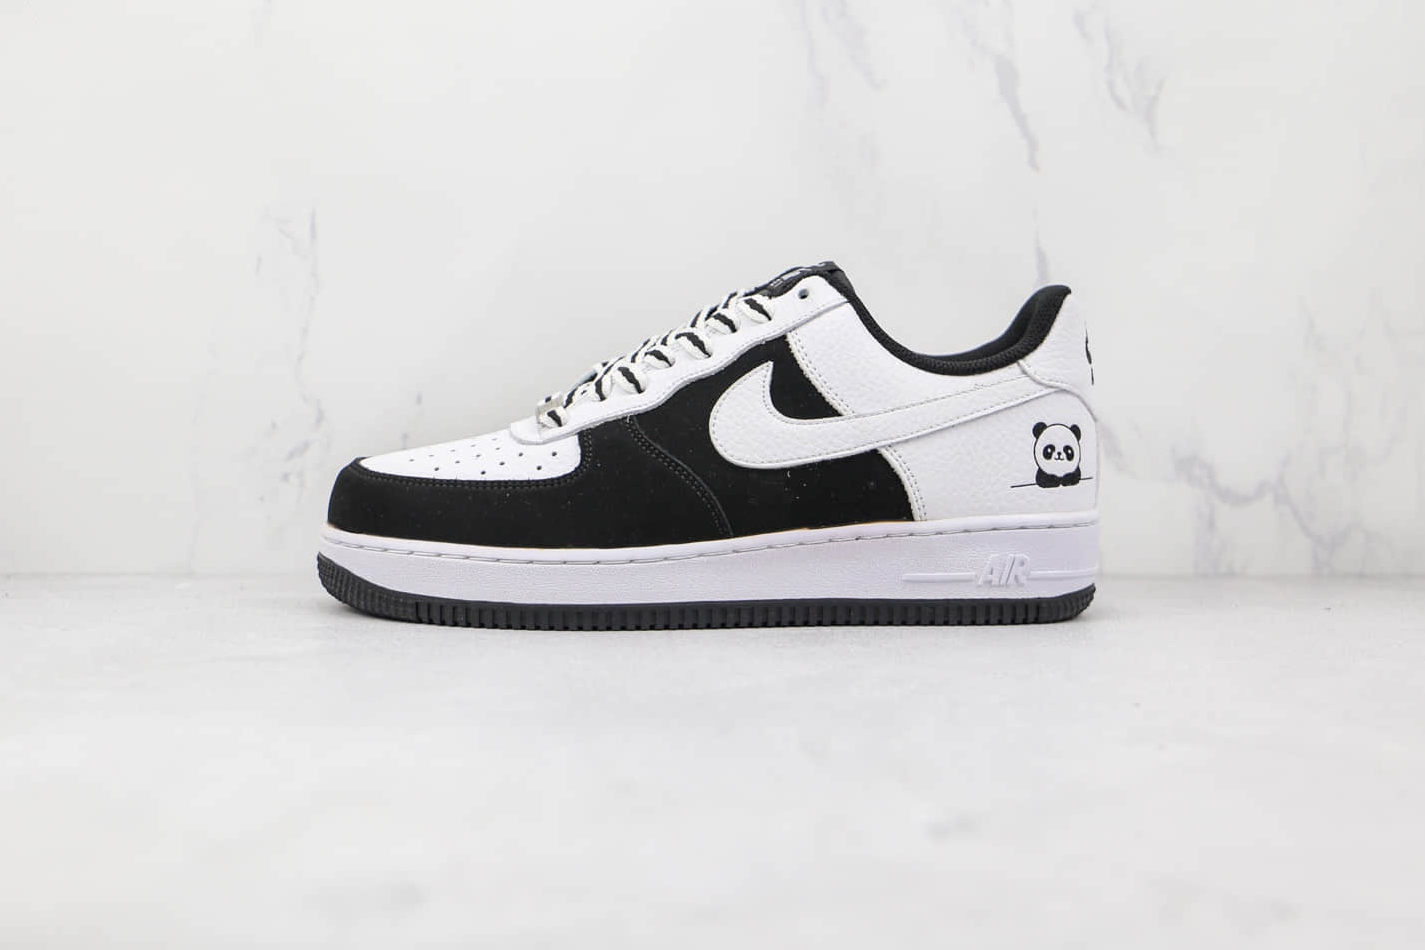 Nike Air Force 1 Low Panda Black White Shoes 554826-116 - Premium Quality Sneakers